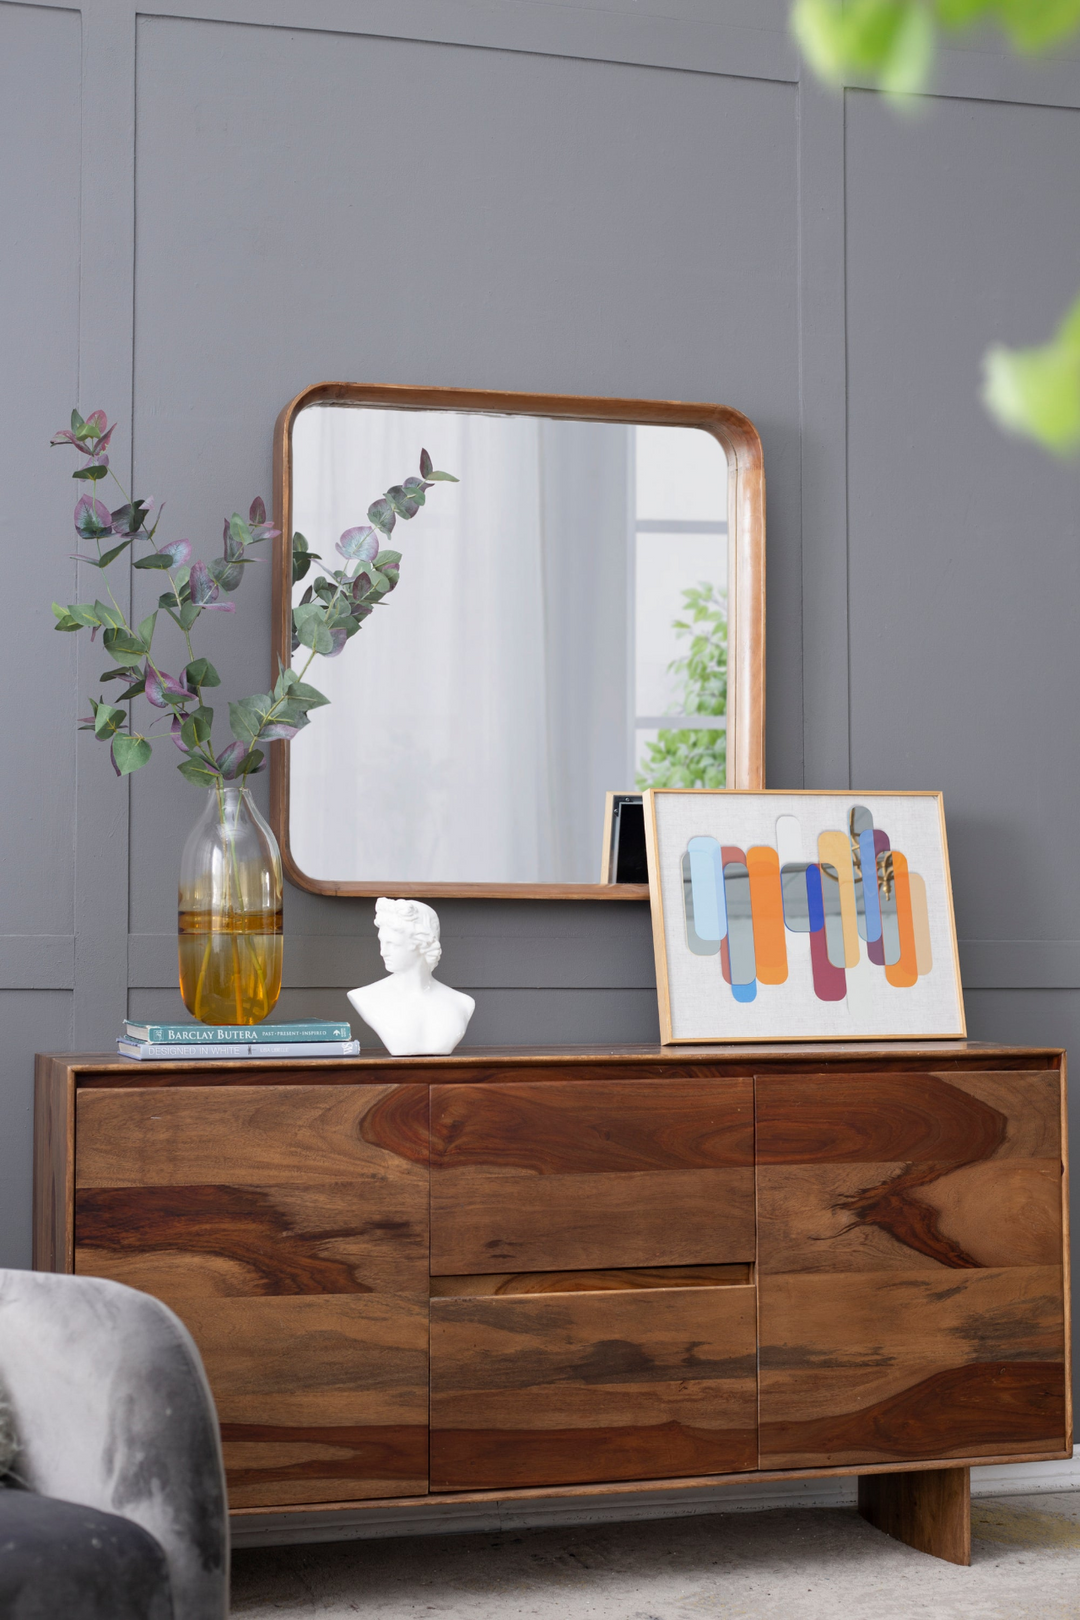 32"x32" Wood Framed Square Wall Mirror | Minimalist Design for Living Room & Bathroom